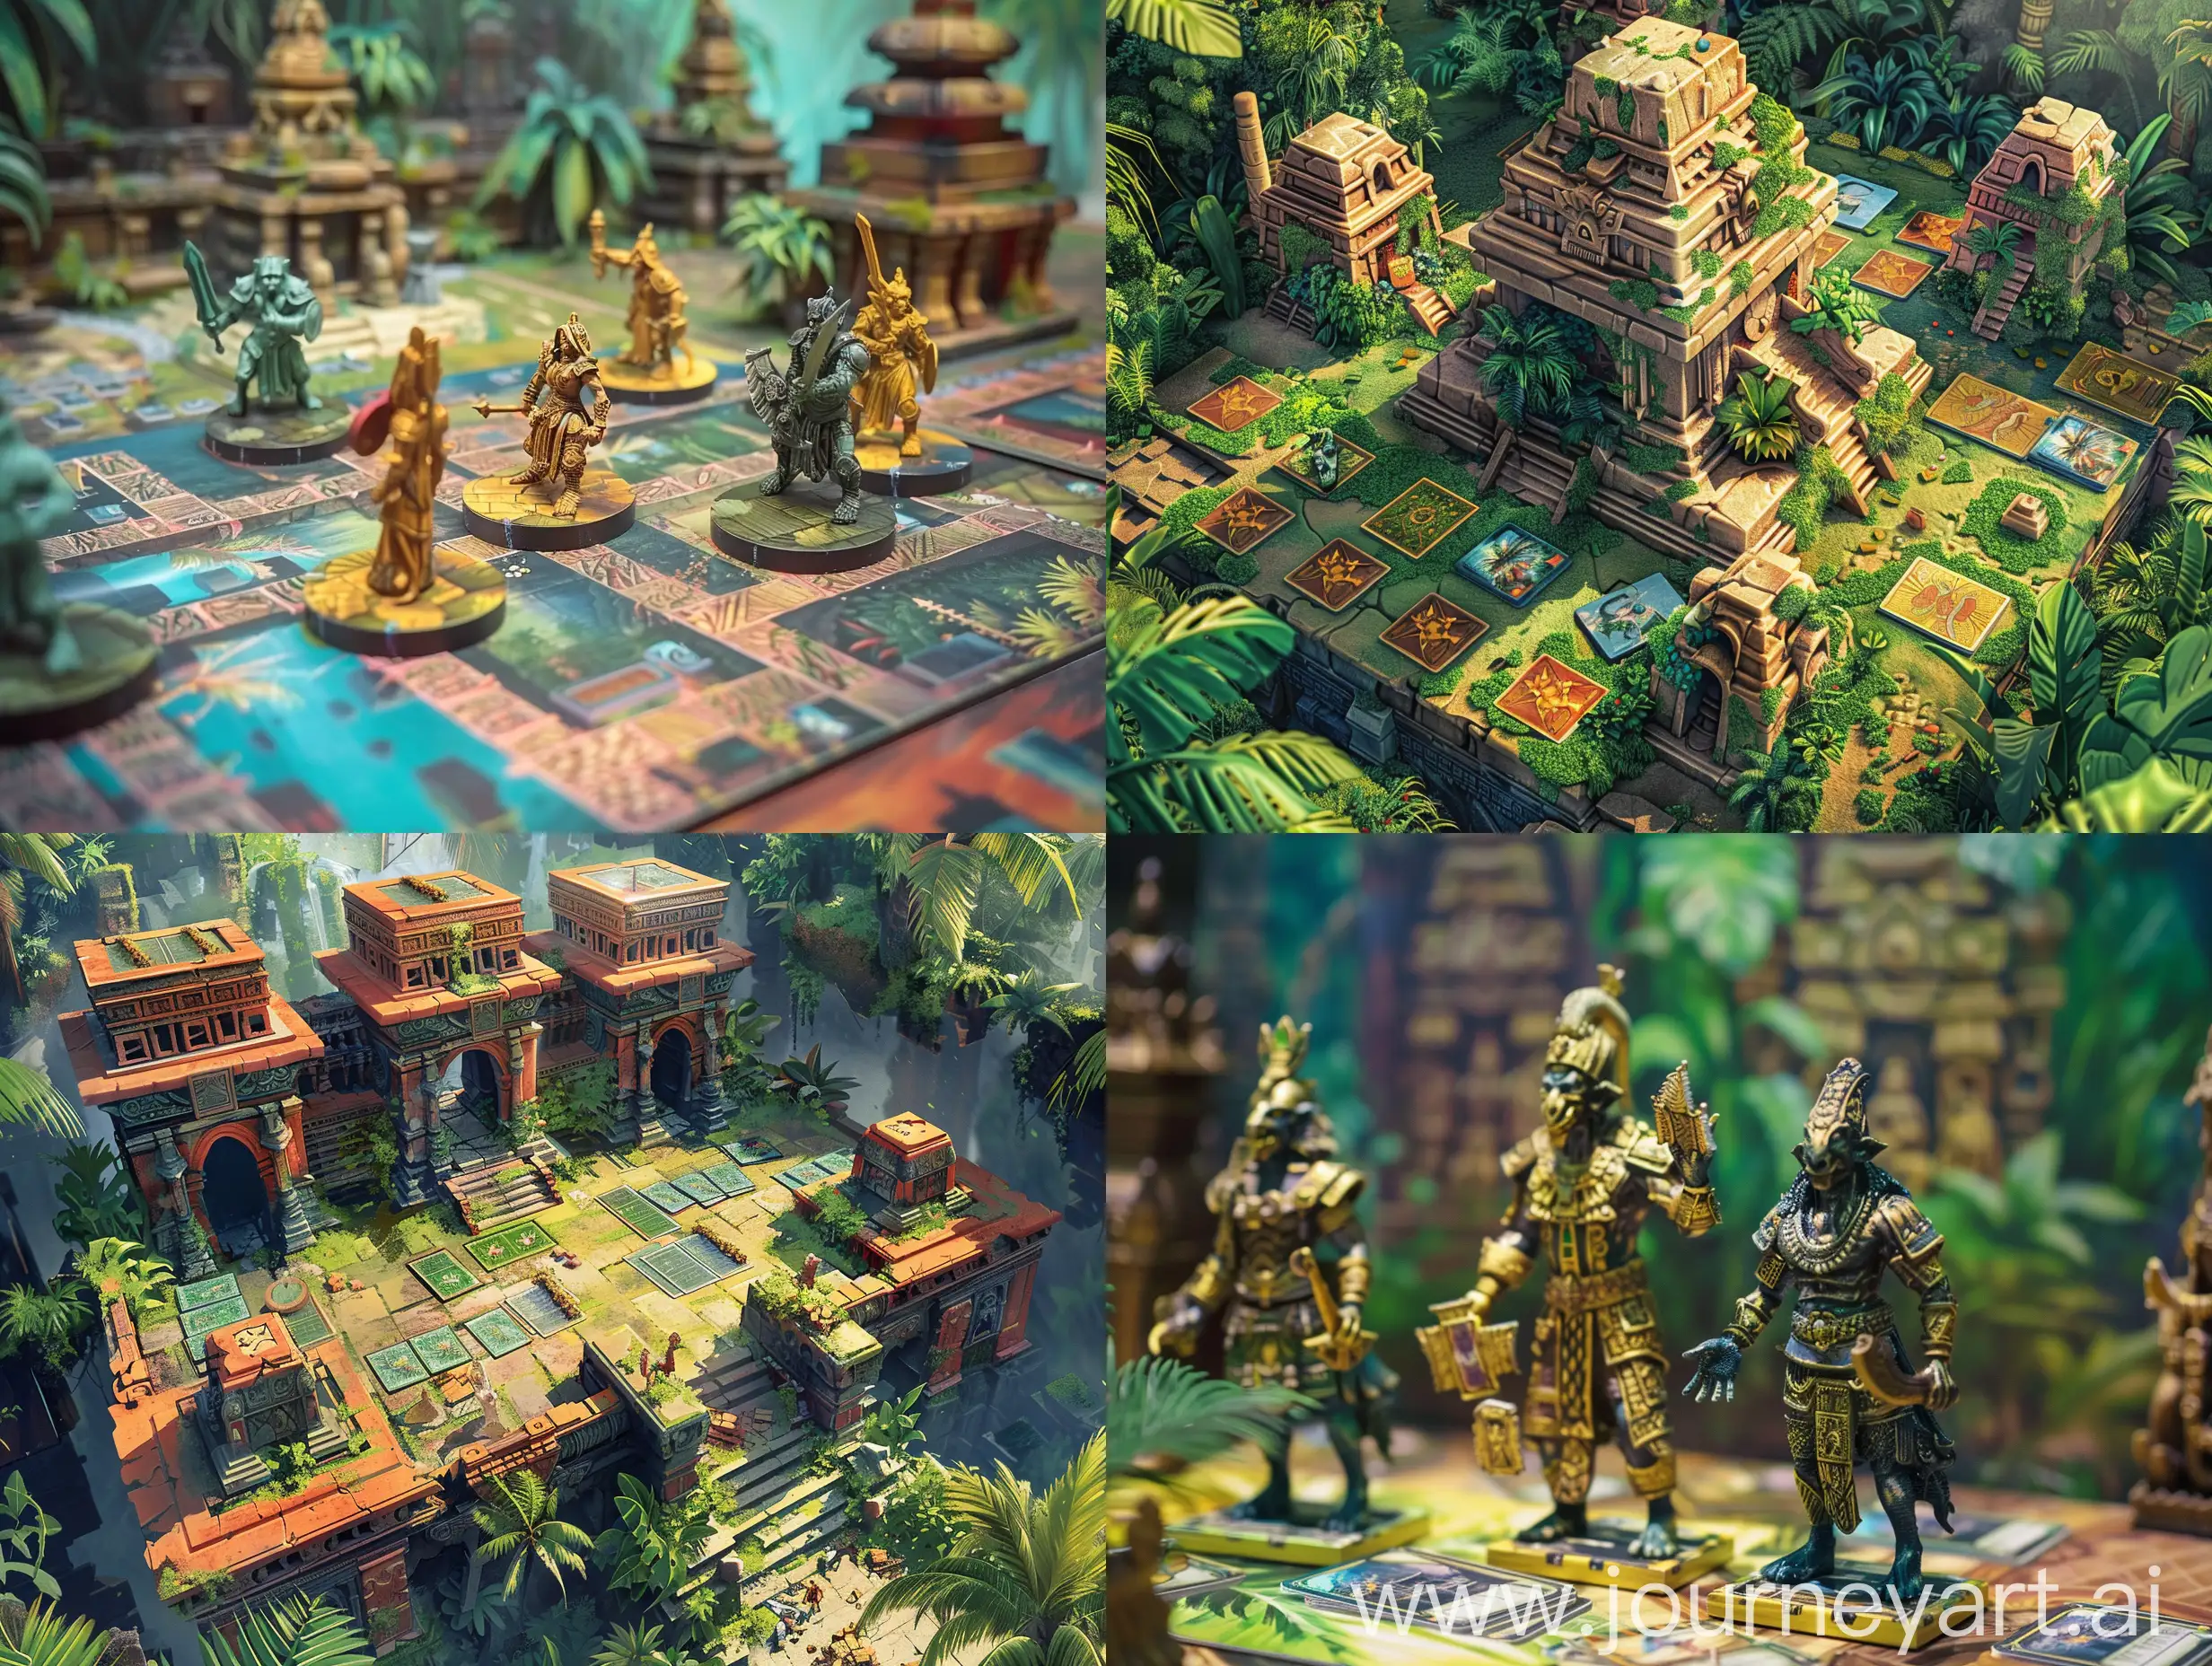 Strategic-Jungle-Adventure-Tactical-Board-Game-with-Temple-Exploration-and-Treasure-Hunt